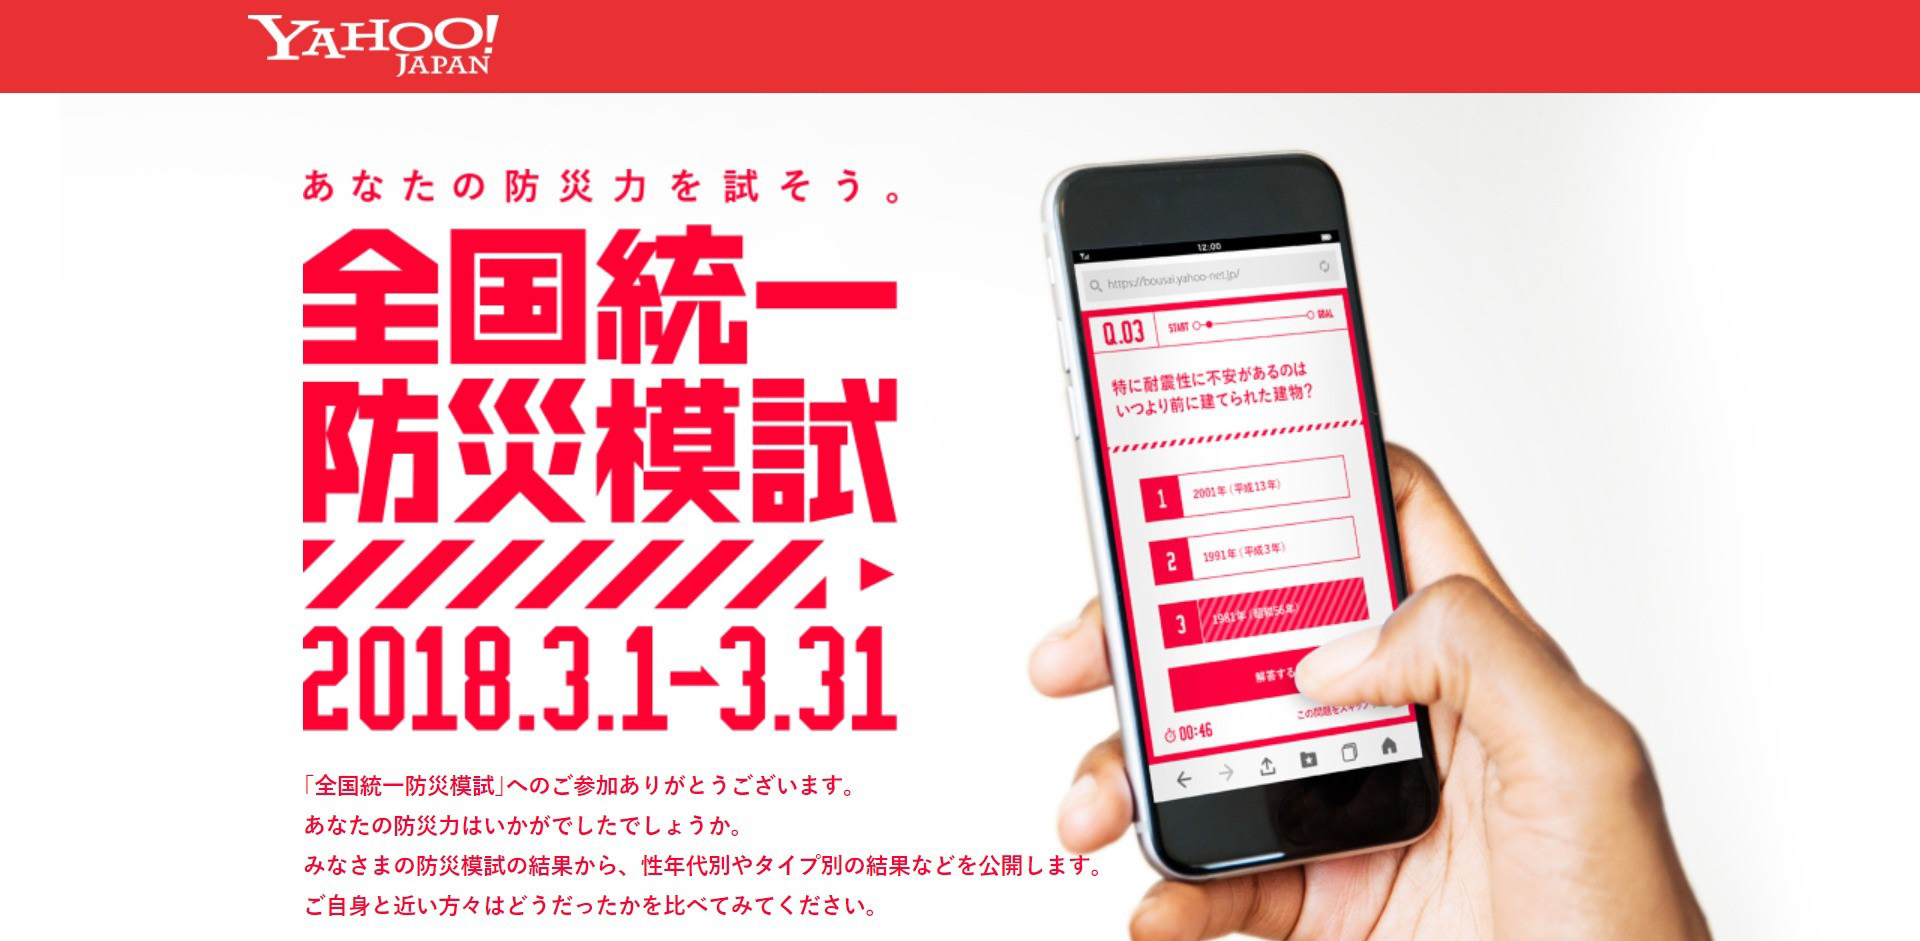 「Yahoo! JAPAN」アプリ内で「全国統一防災模試」を3月に実施、約65万人が参加しました